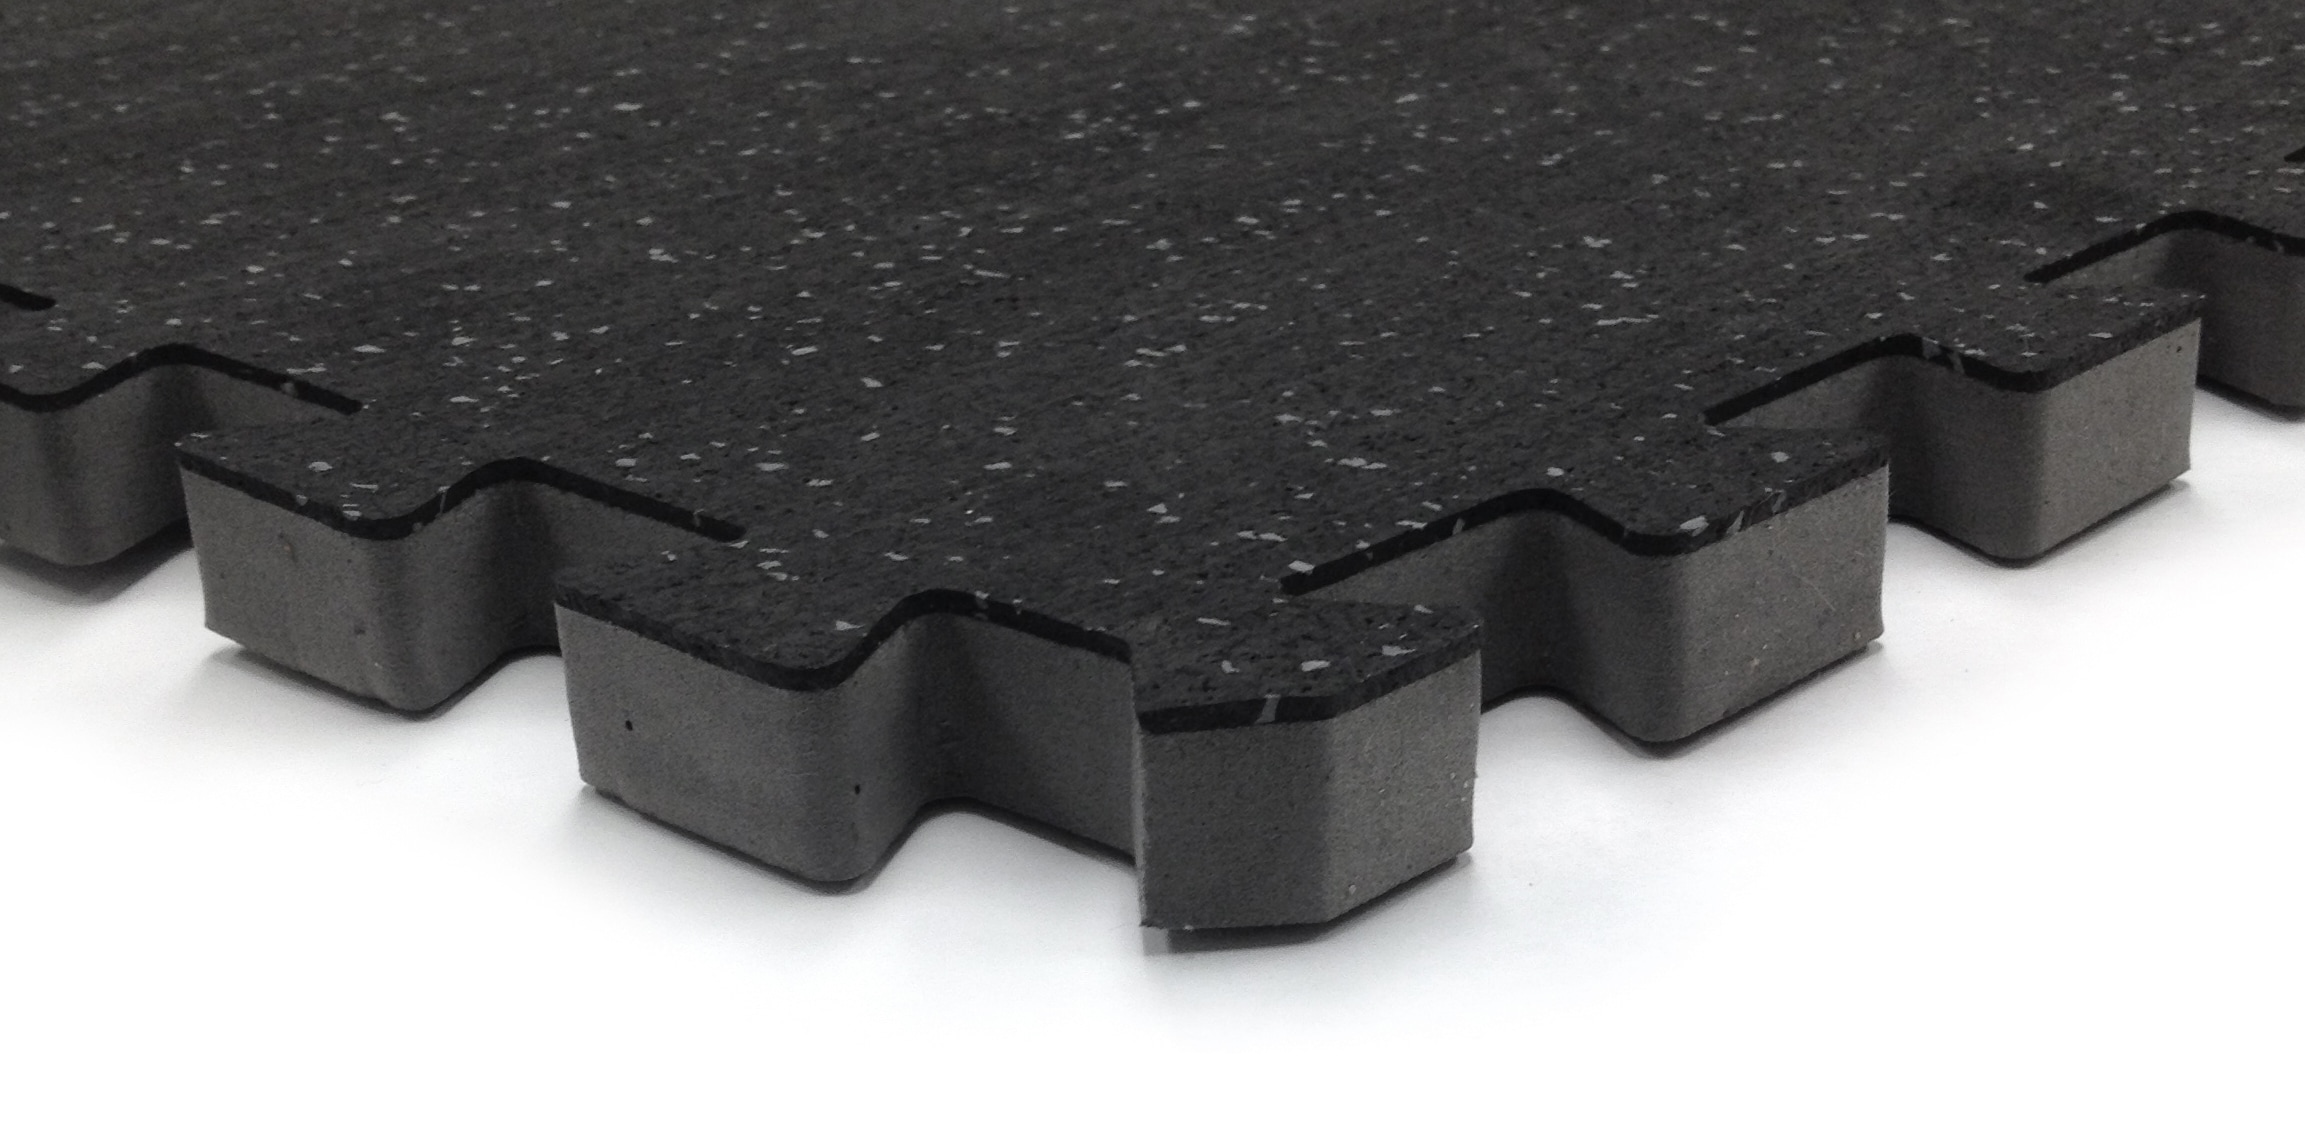 Foam Mat Floor Tiles, Interlocking Ultimate Comfort EVA Foam Padding by  Stalwart - Soft Flooring for Exercising, Yoga, Camping, Kids, Babies,  Playroom 